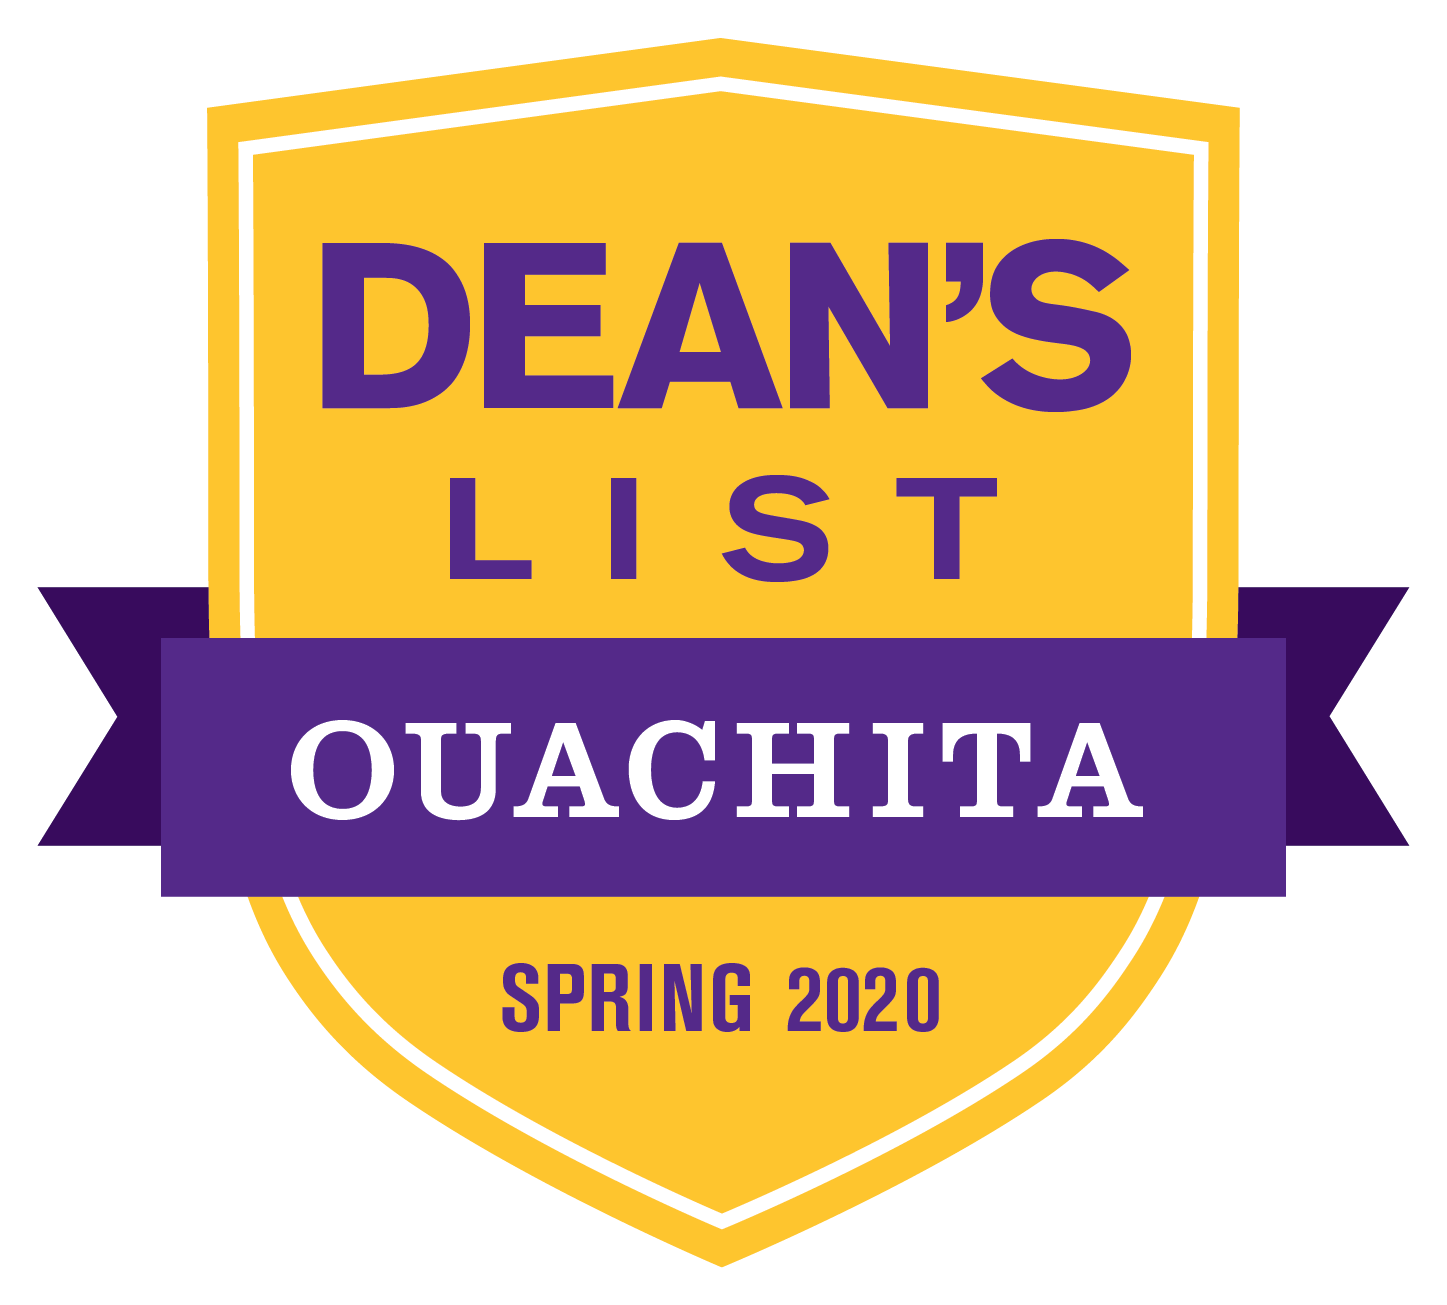 Dean's list badge spring 2020 